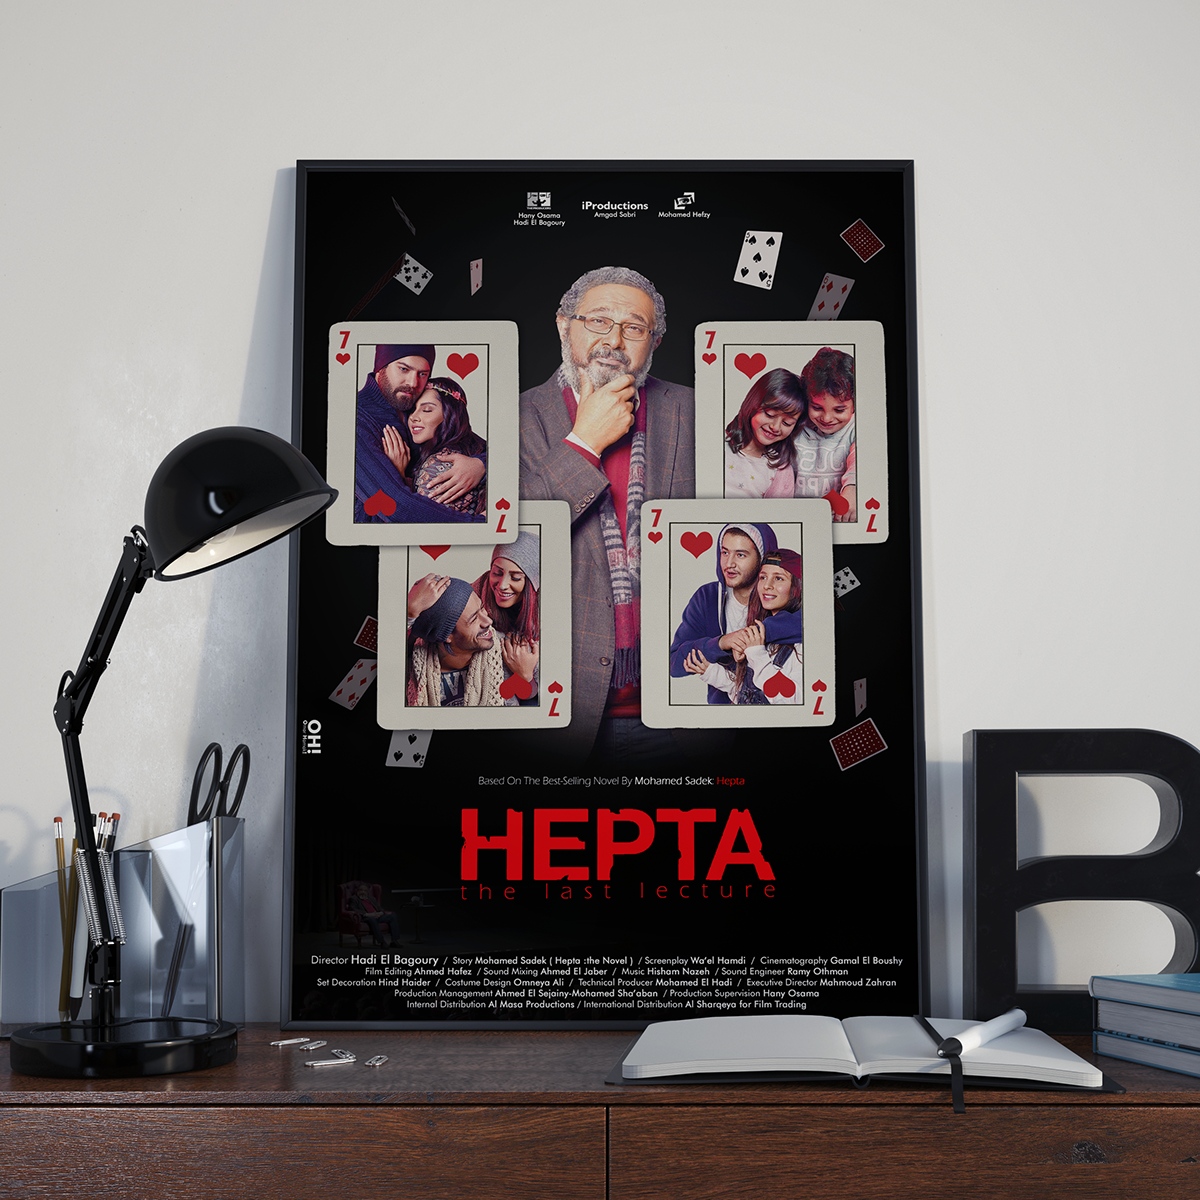 hepta poster last lecture non-official design retouch